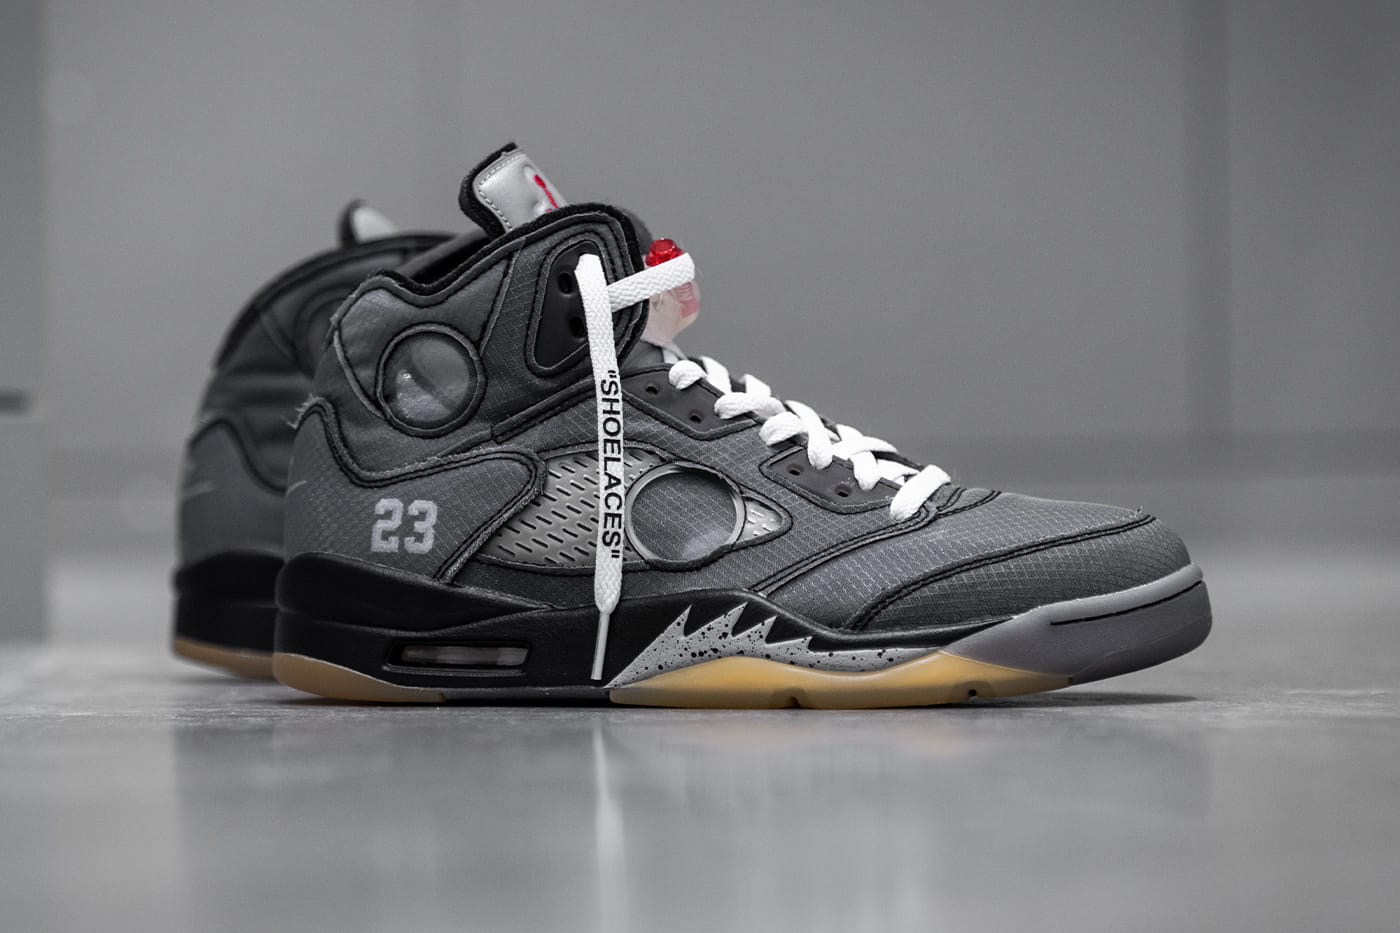 Nike Air Jordan 5 Rood